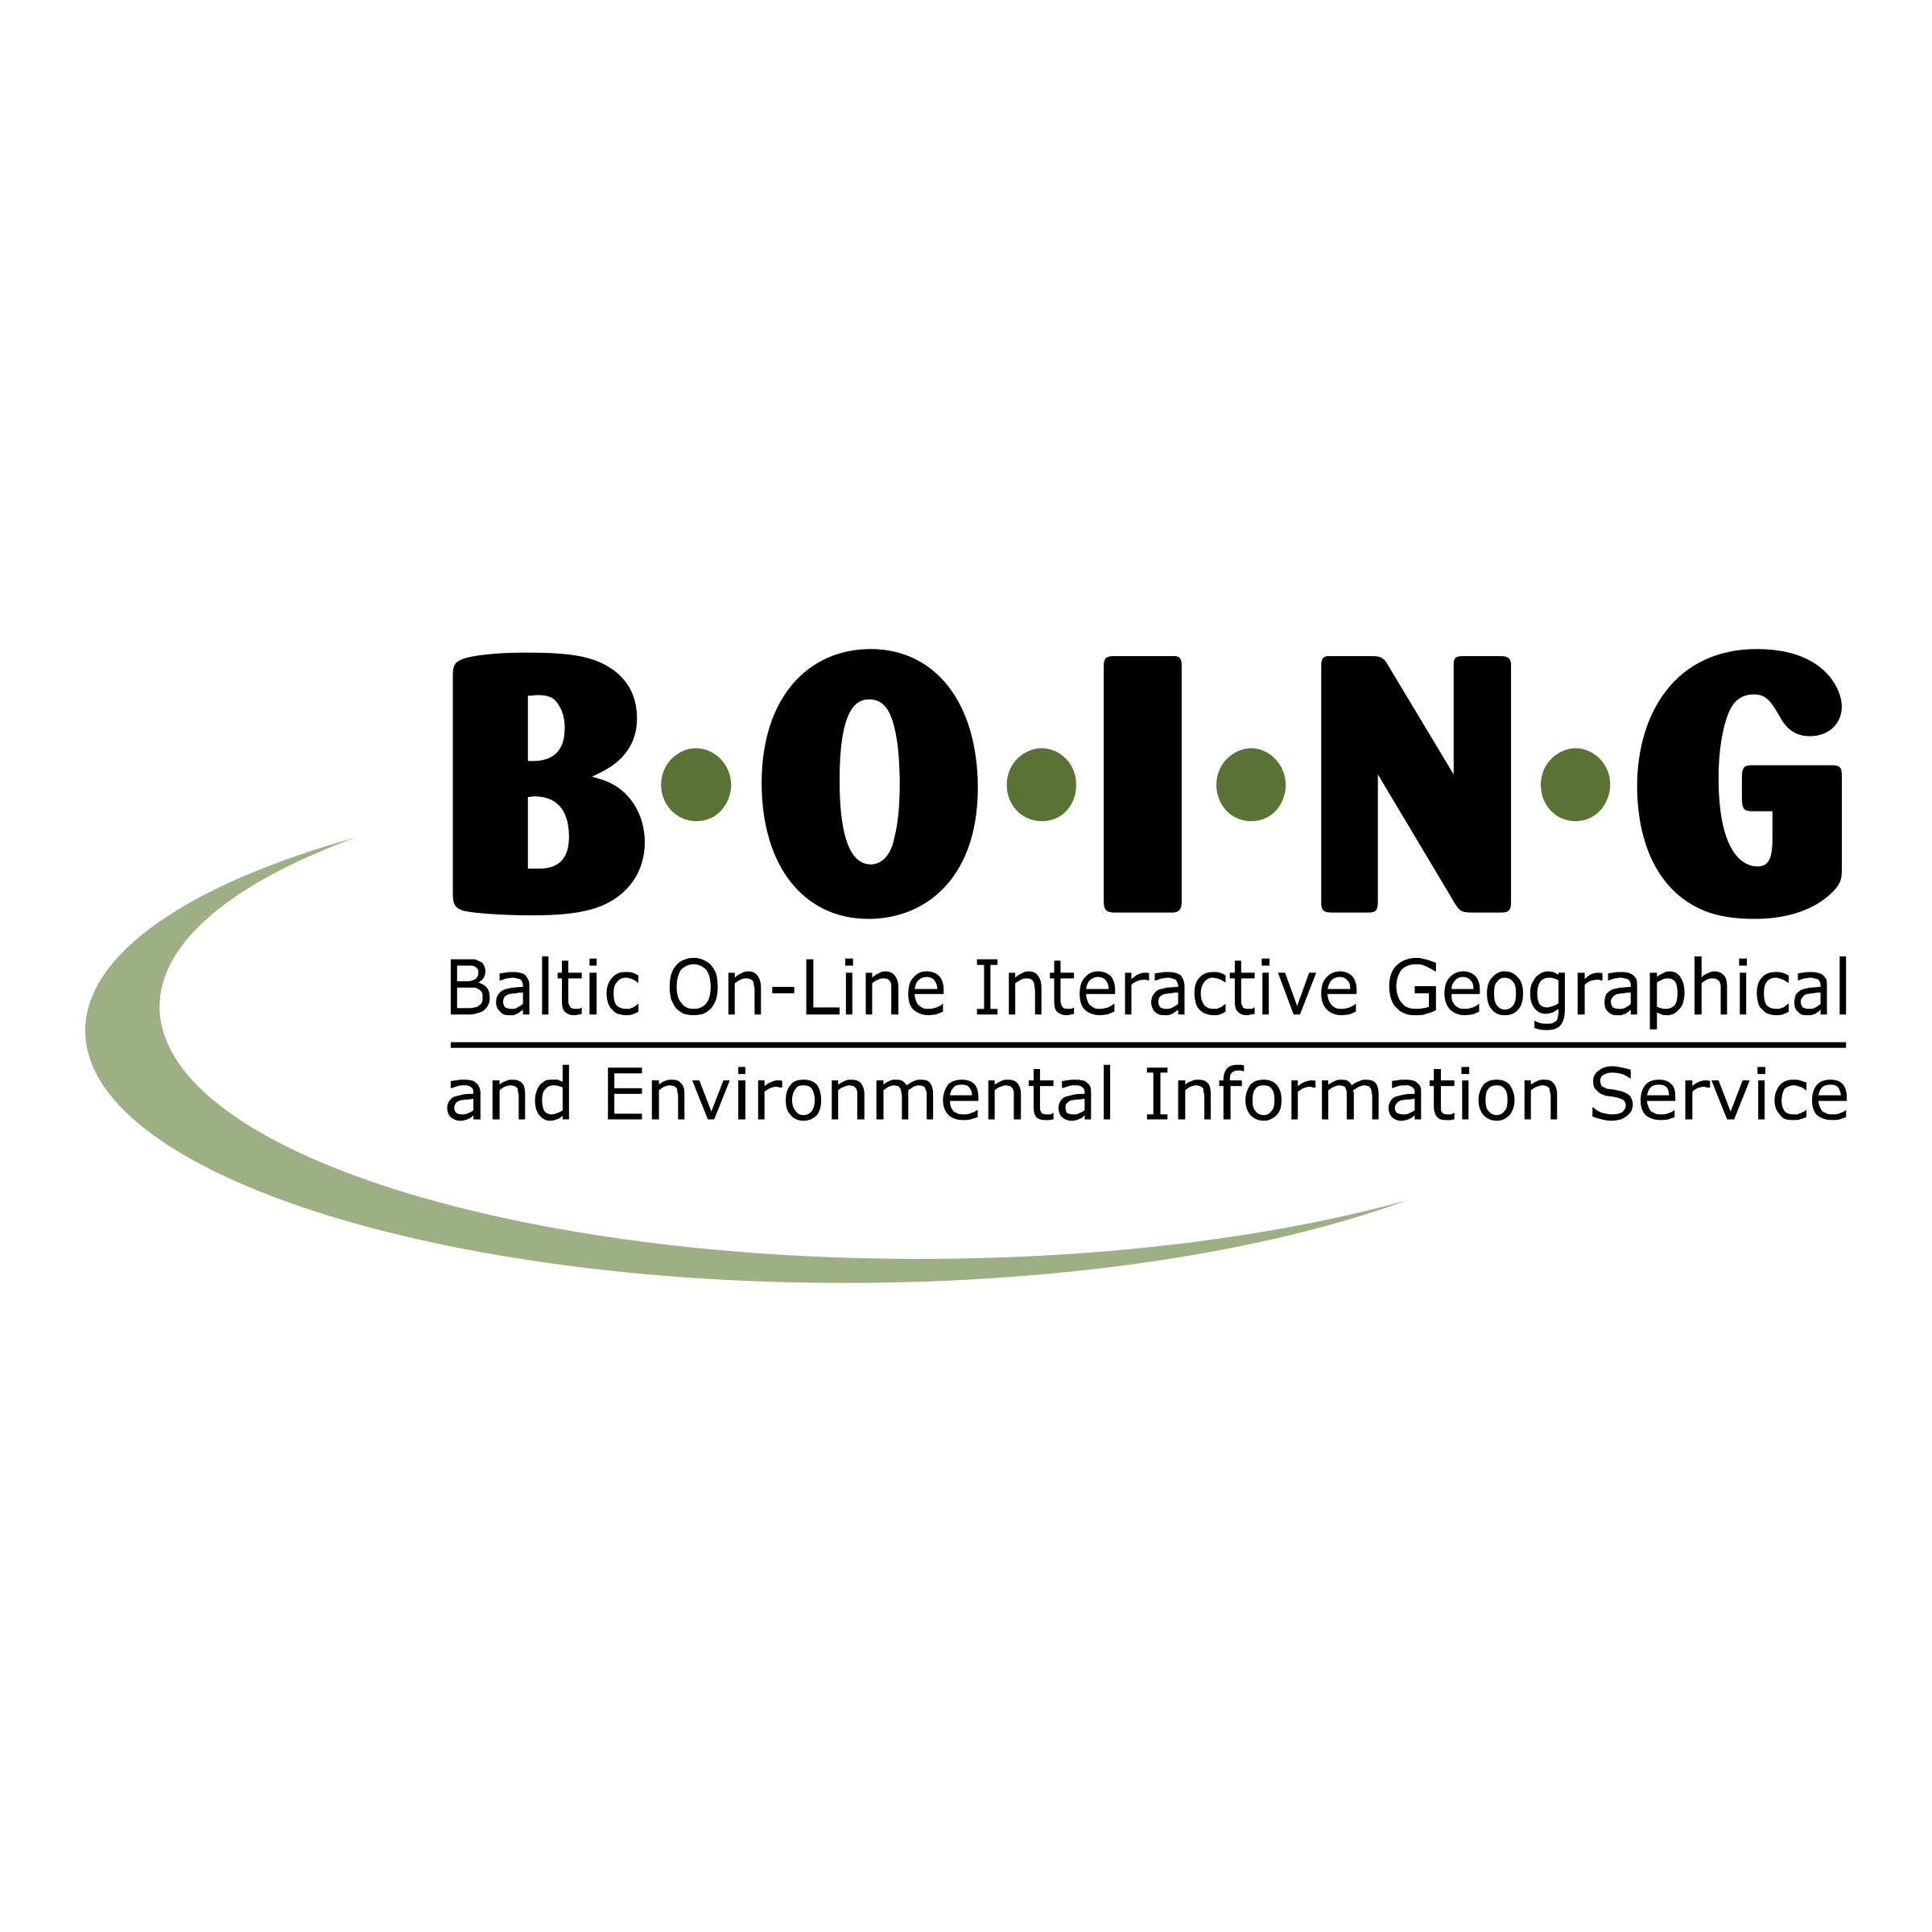 Boing Logo - BOING Logo PNG Transparent & SVG Vector - Freebie Supply